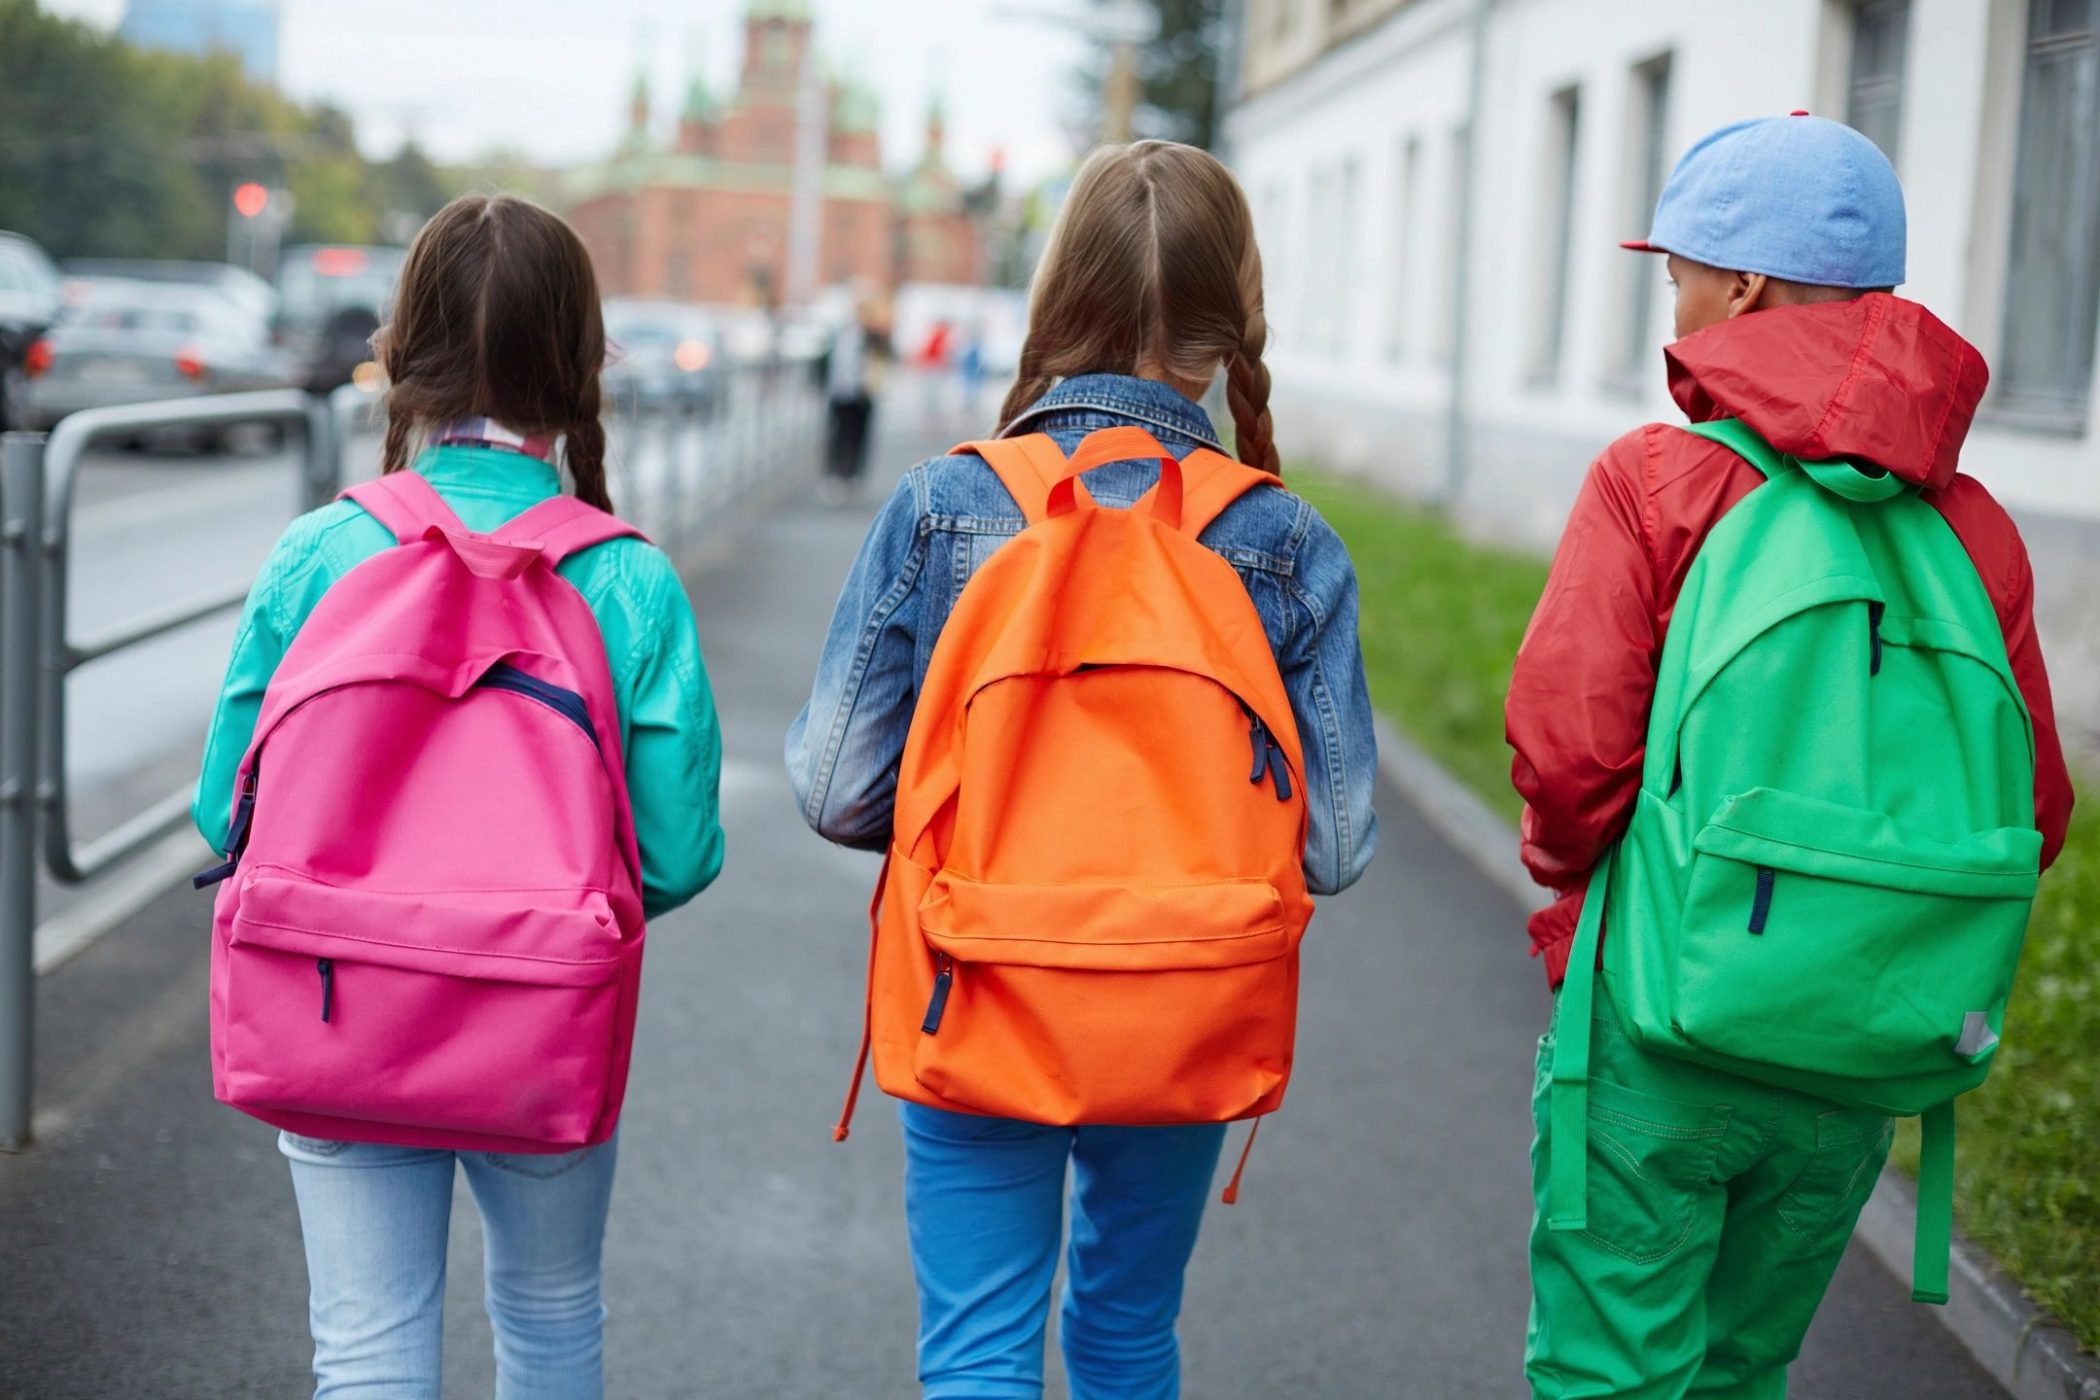 Kids walking into school with backpacks like children of DC widow blog writer Marjorie Brimley